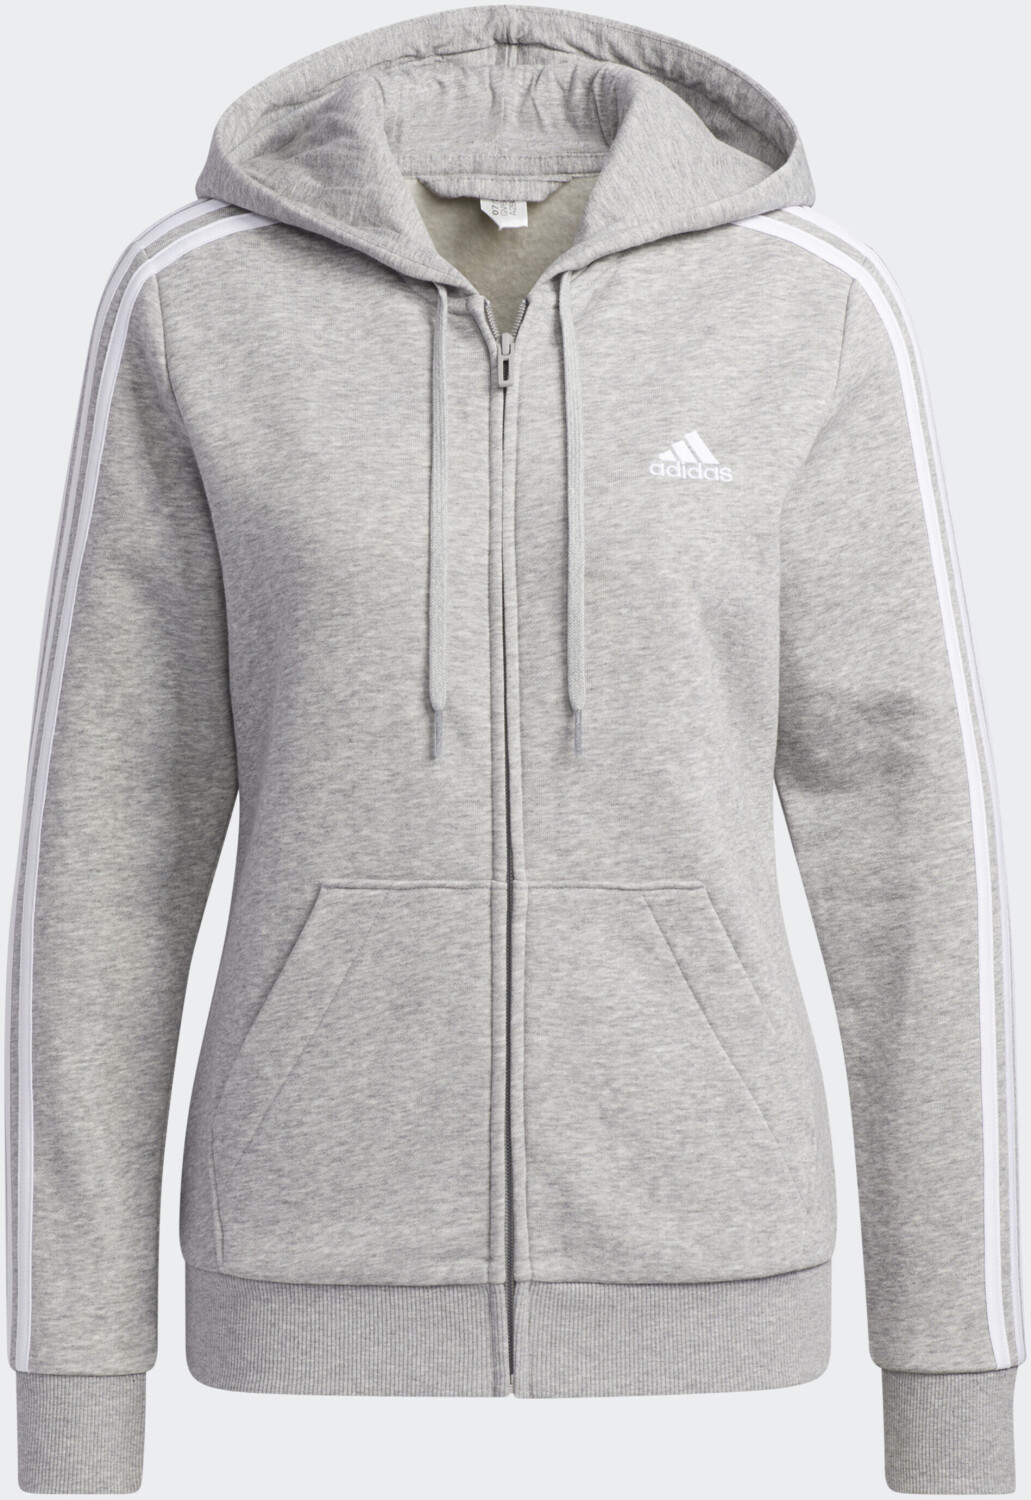 Adidas Essentials Fleece 3-Streifen Kapuzenjacke medium grey heather/white  ab 30,00 € | Preisvergleich bei